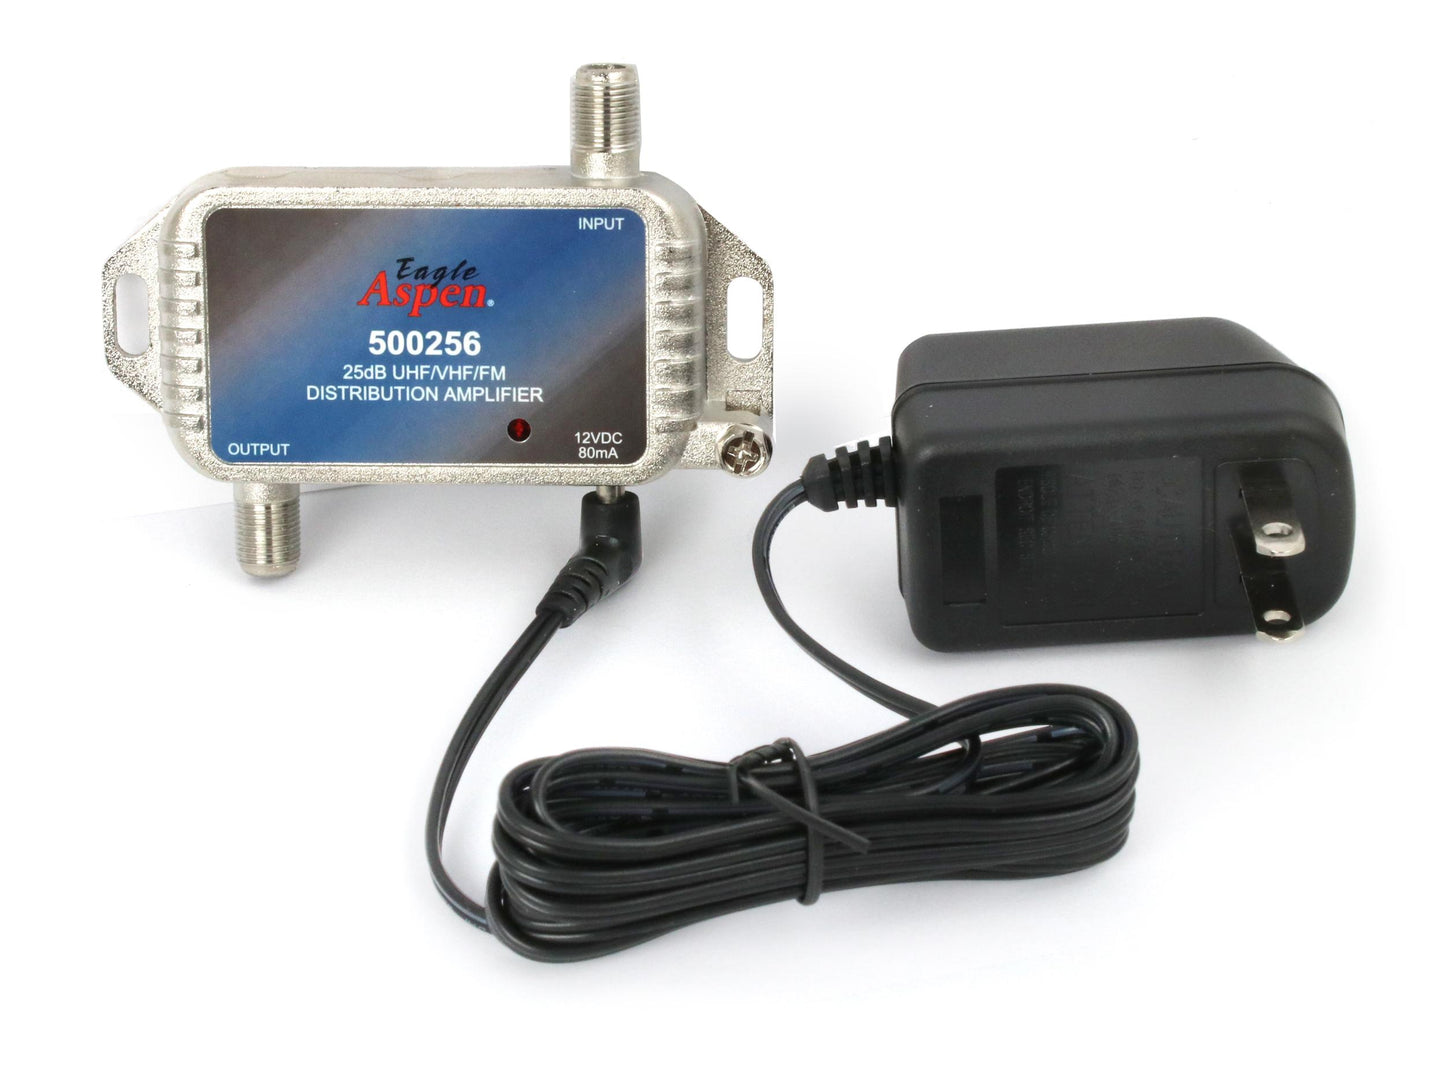 Eagle Aspen DISTAMP-25-GX, 25dB UHF/VHF/FM distribution amplifier (500256)